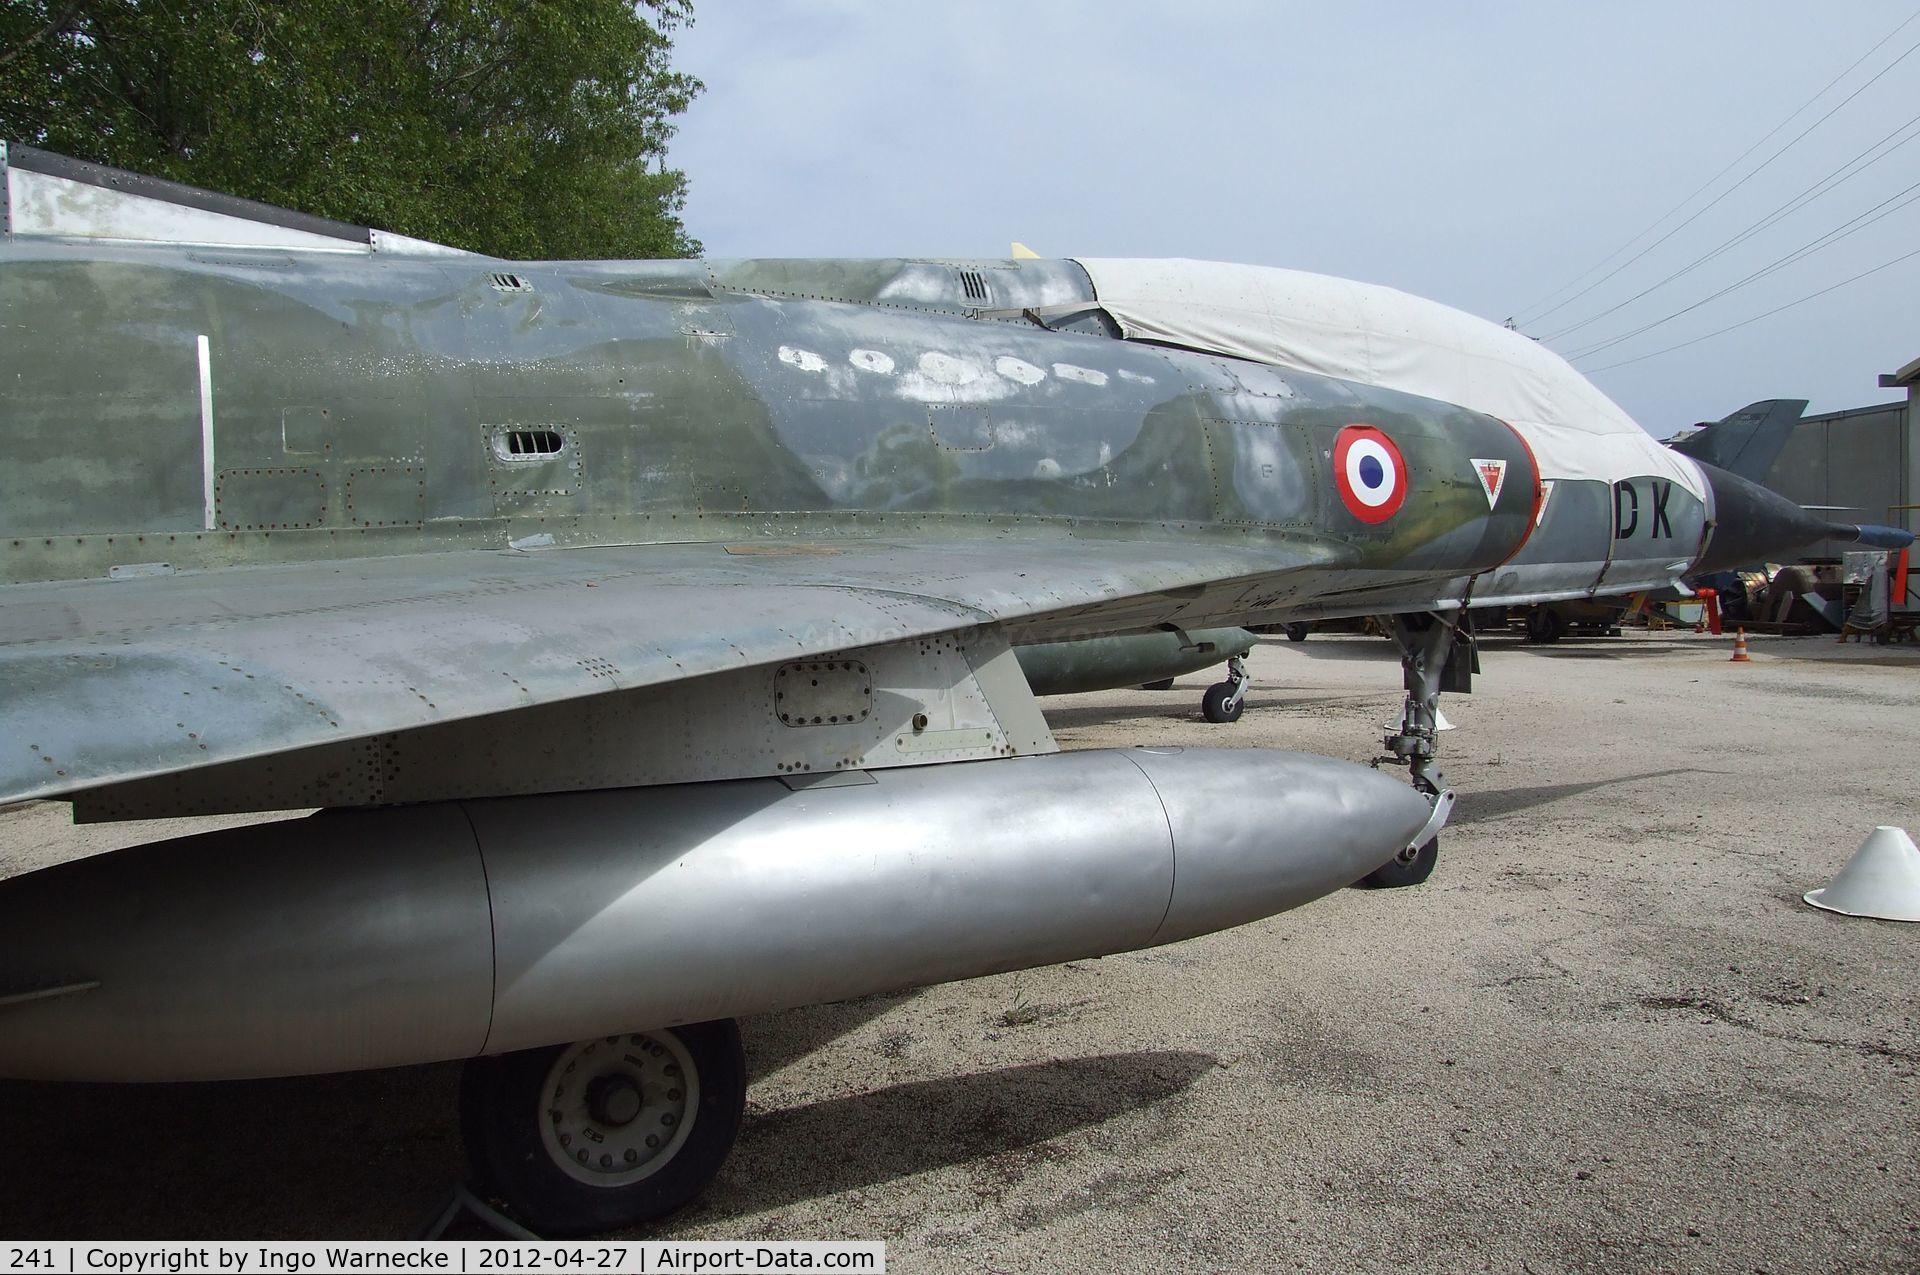 241, Dassault Mirage IIIB-RV C/N 241, Dassault Mirage III B-RV at the Musee Aeronautique, Orange